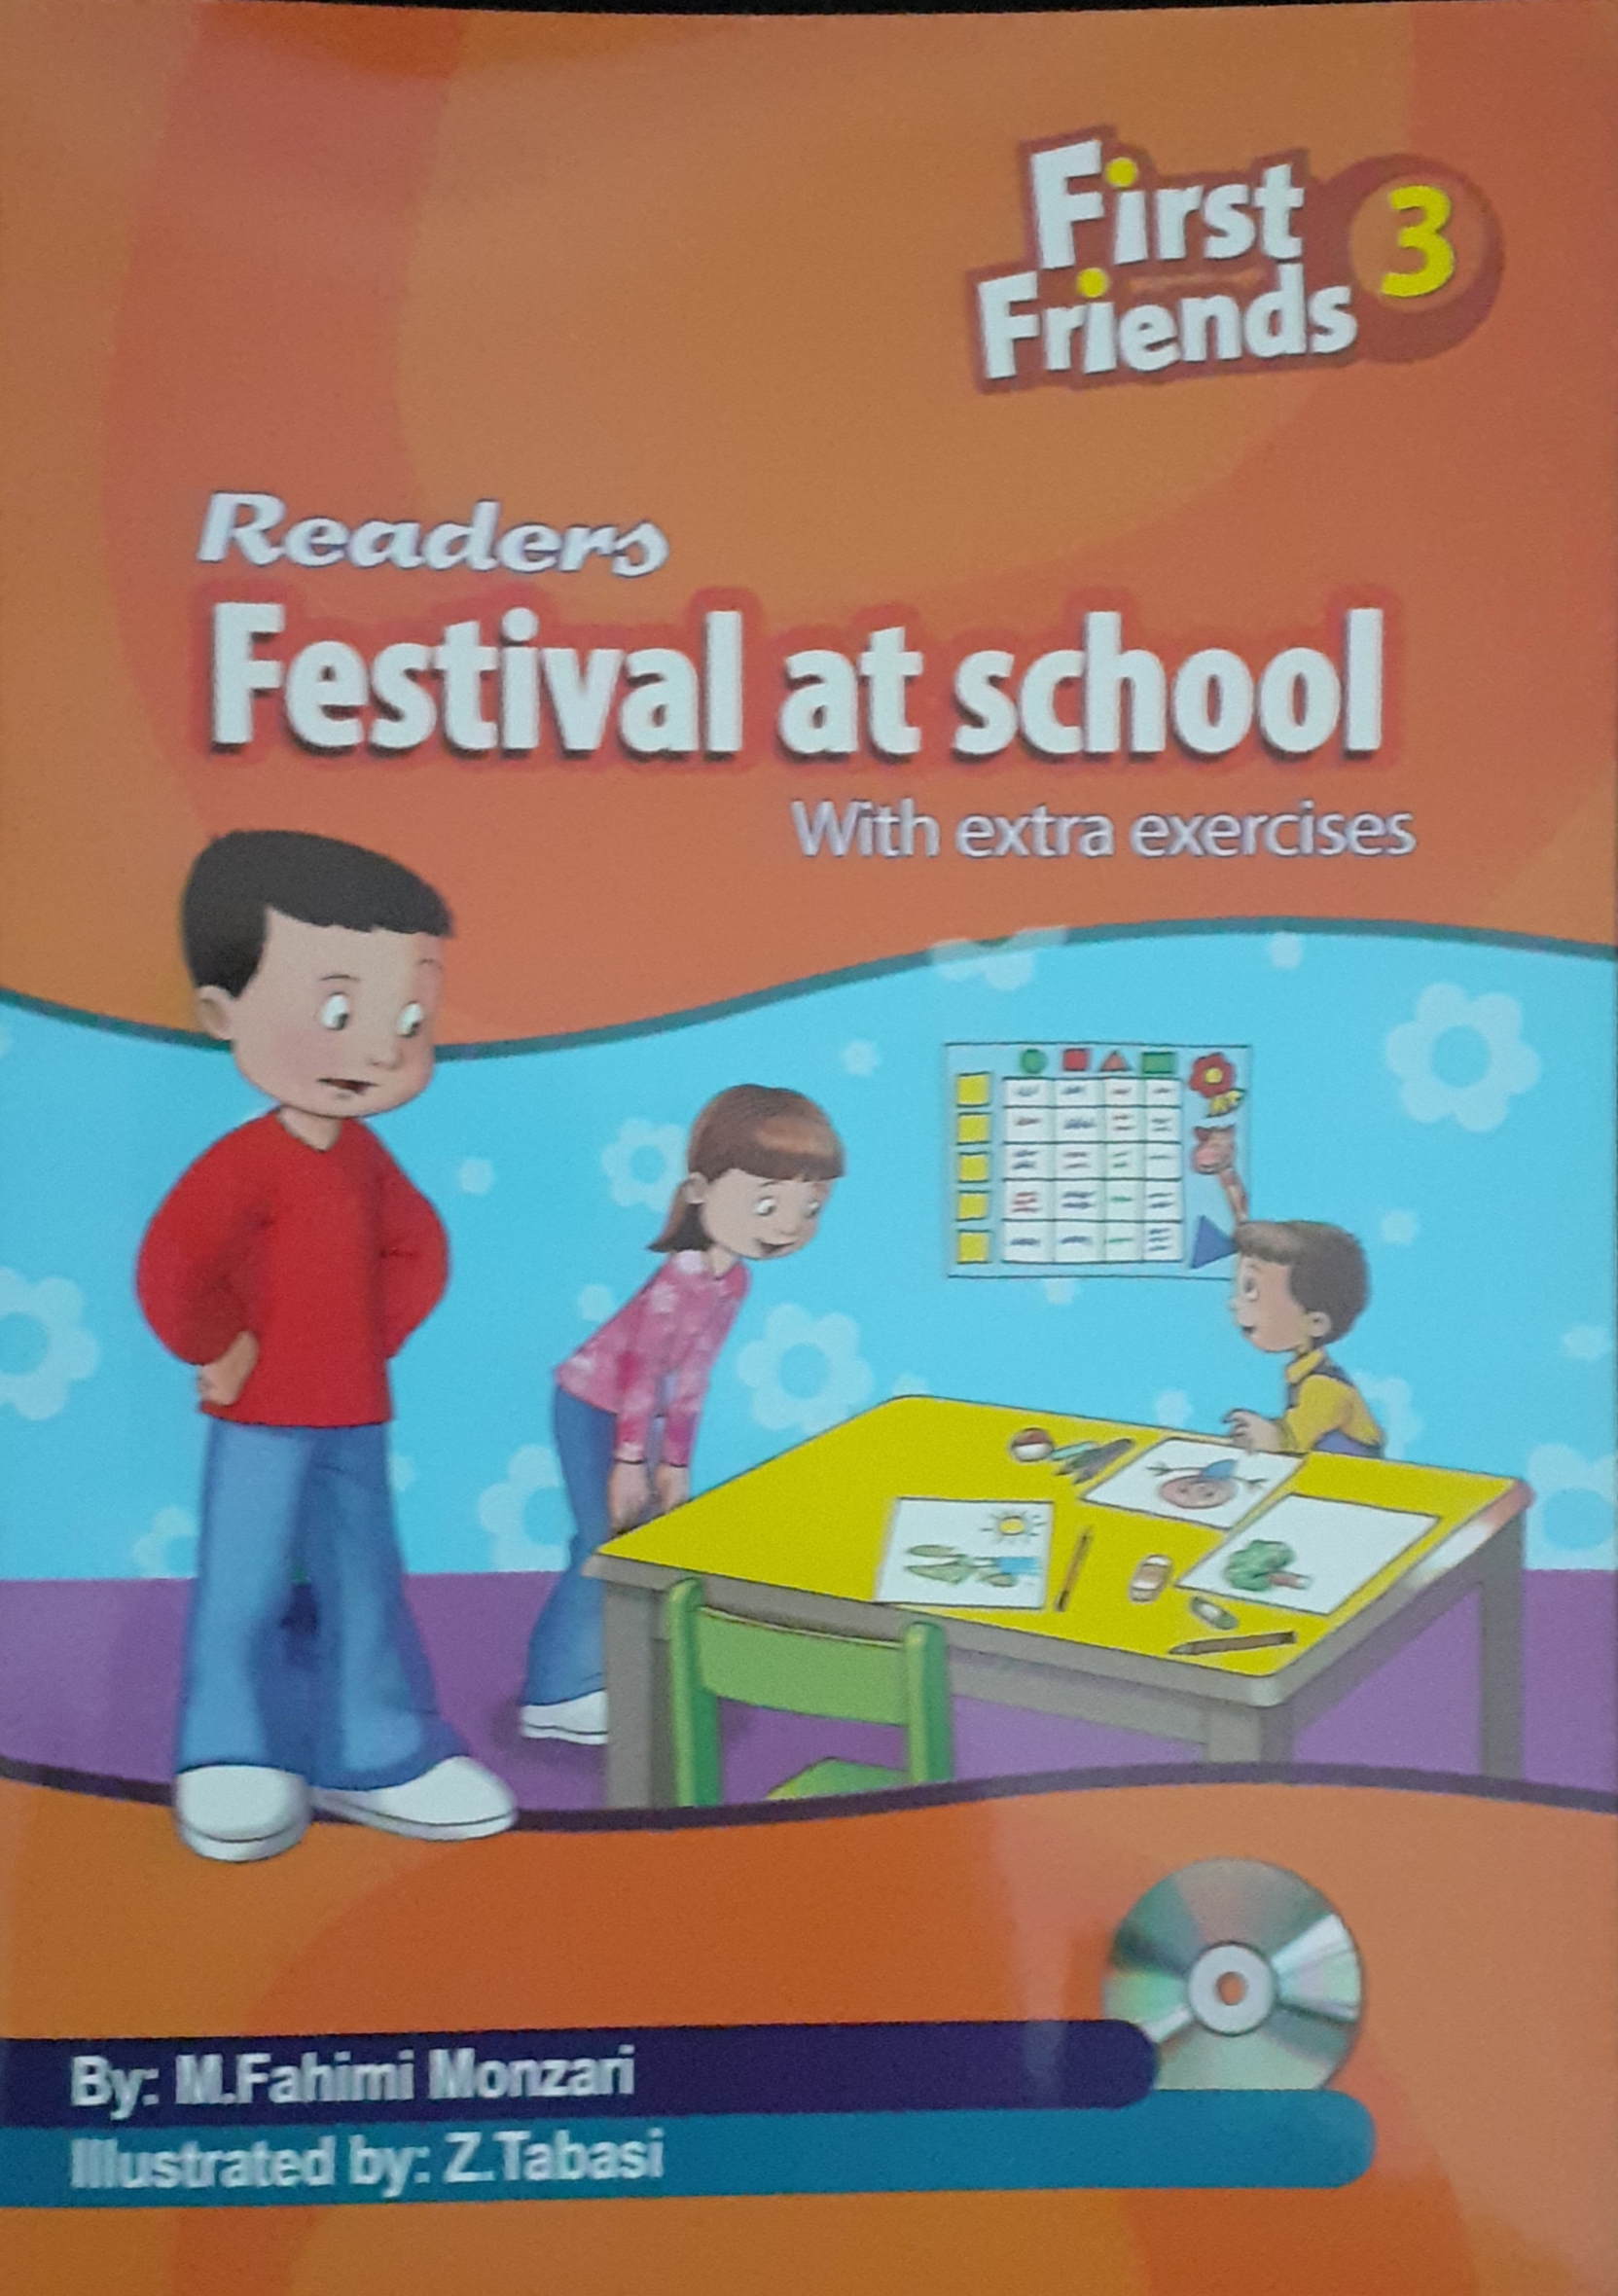 کتاب داستان فرست فرندز 3 { First friends 3 { Festival at school